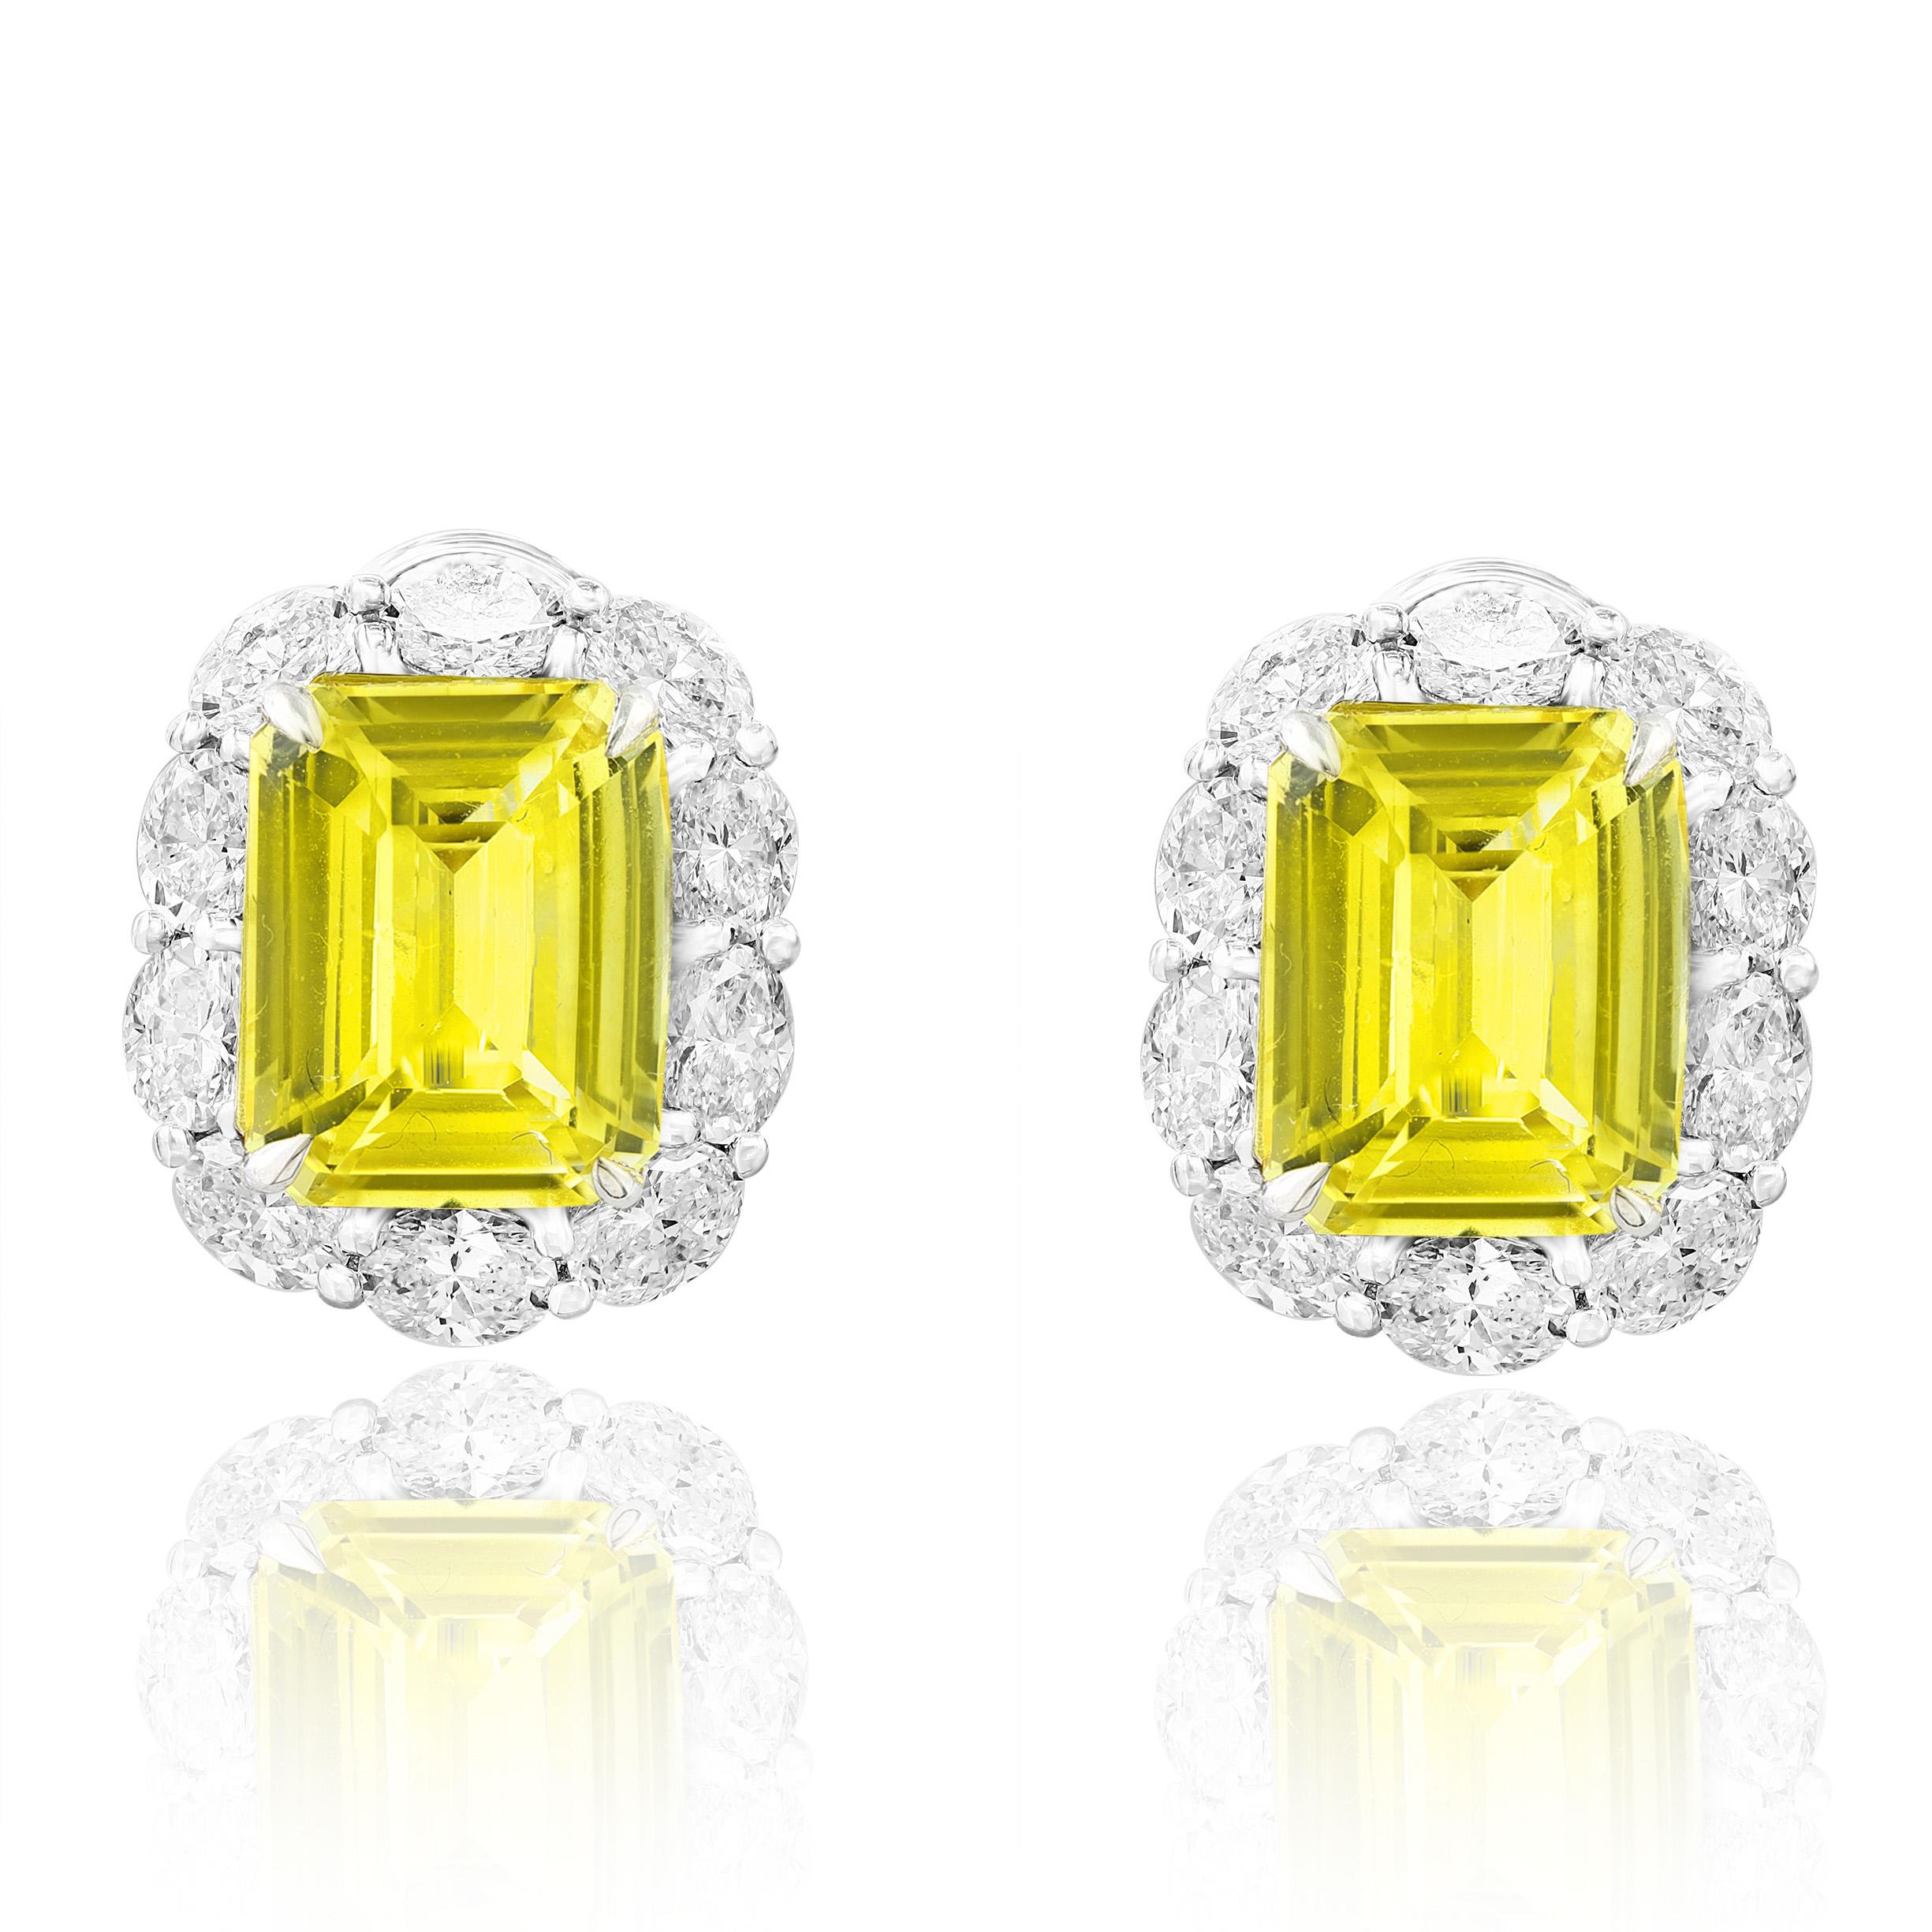 Modern 10.09 Carat Emerald Cut Yellow Sapphire Diamond Halo Earring in 18K White Gold For Sale